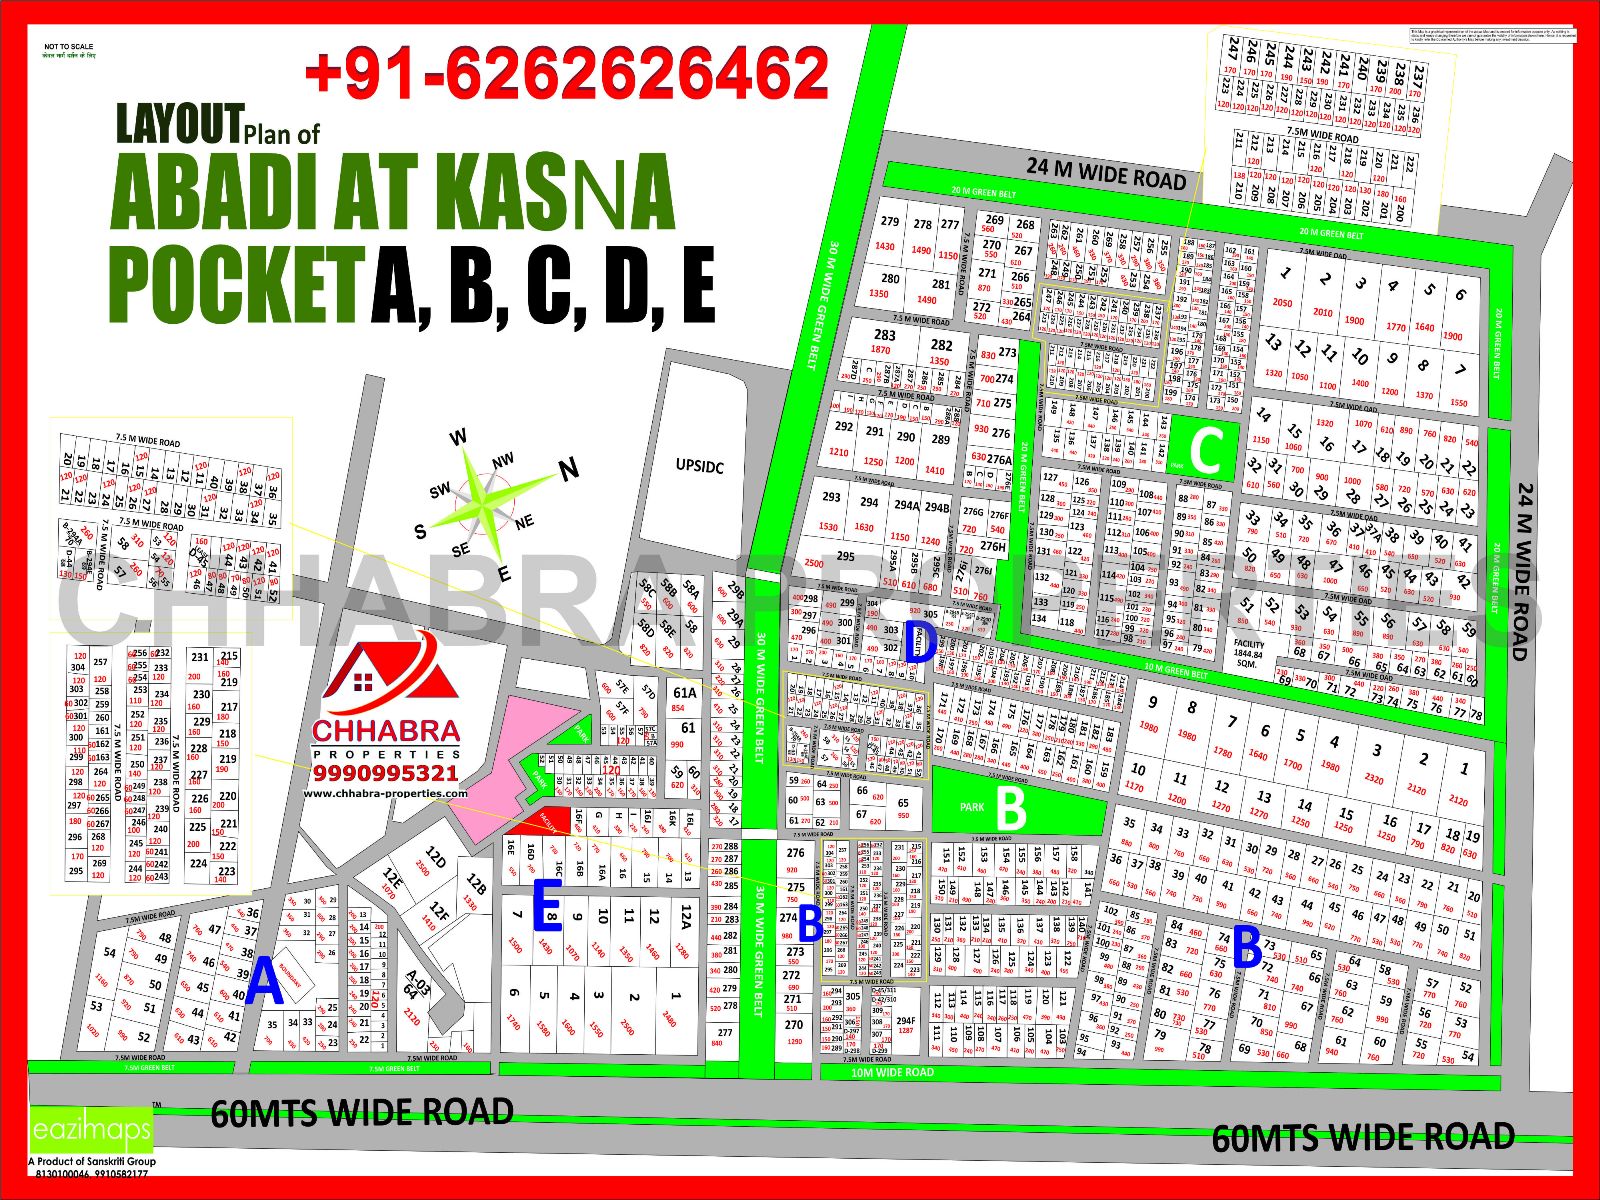 layout plan for abadi at kasna pocket abcde hd map